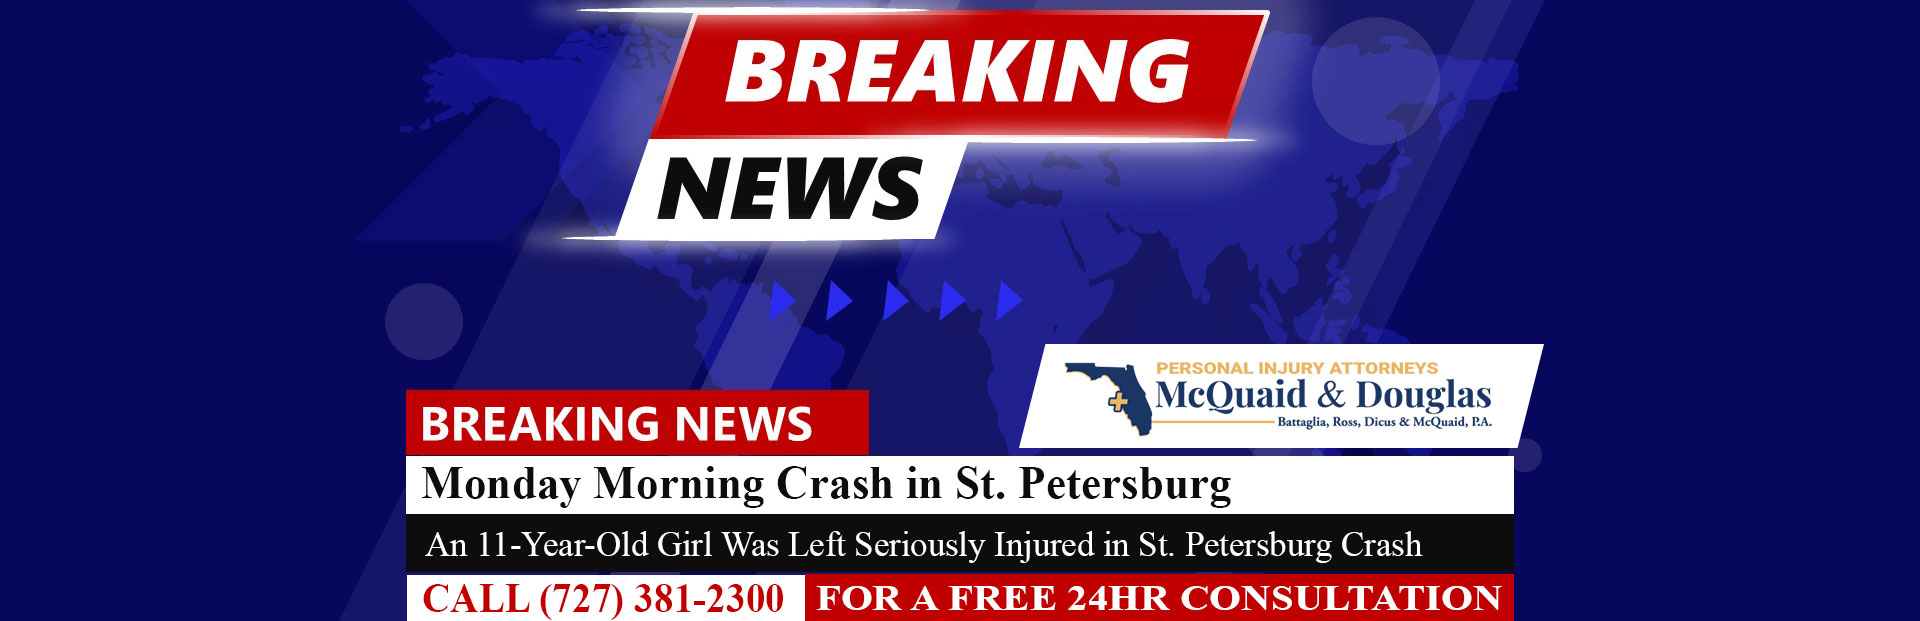 [04-15-24] Monday Morning Crash in St. Petersburg Leaves 11-Year-Old Seriously Injured